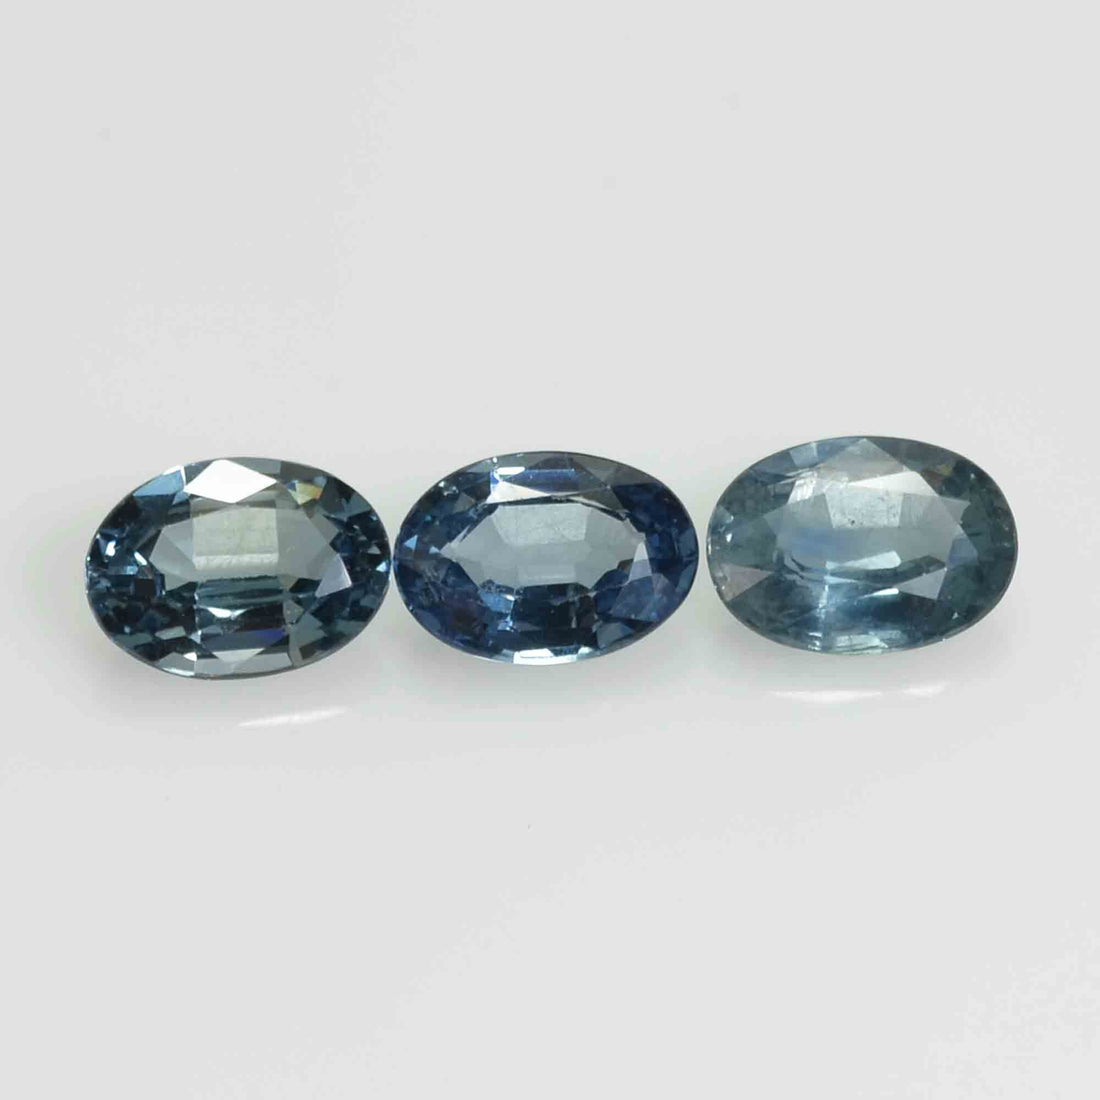 7x5 MM Natural Teal Bluish Green Sapphire Loose Gemstone Oval Cut